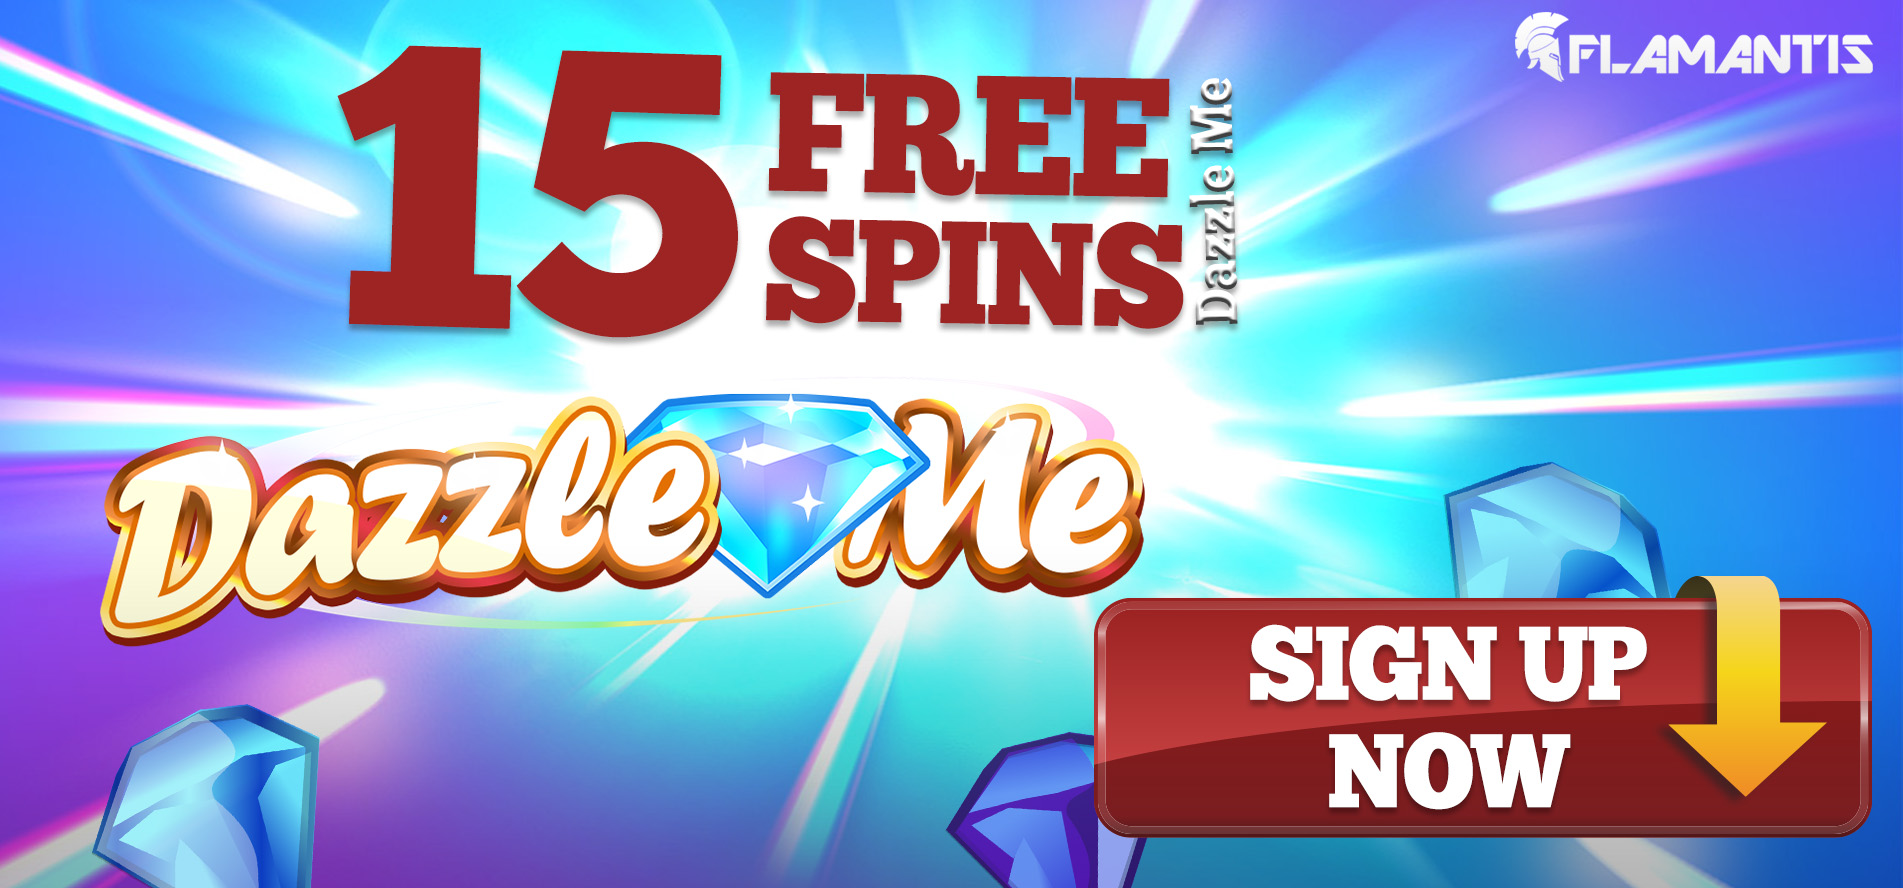 Flamantis Casino free spins no deposit needed!